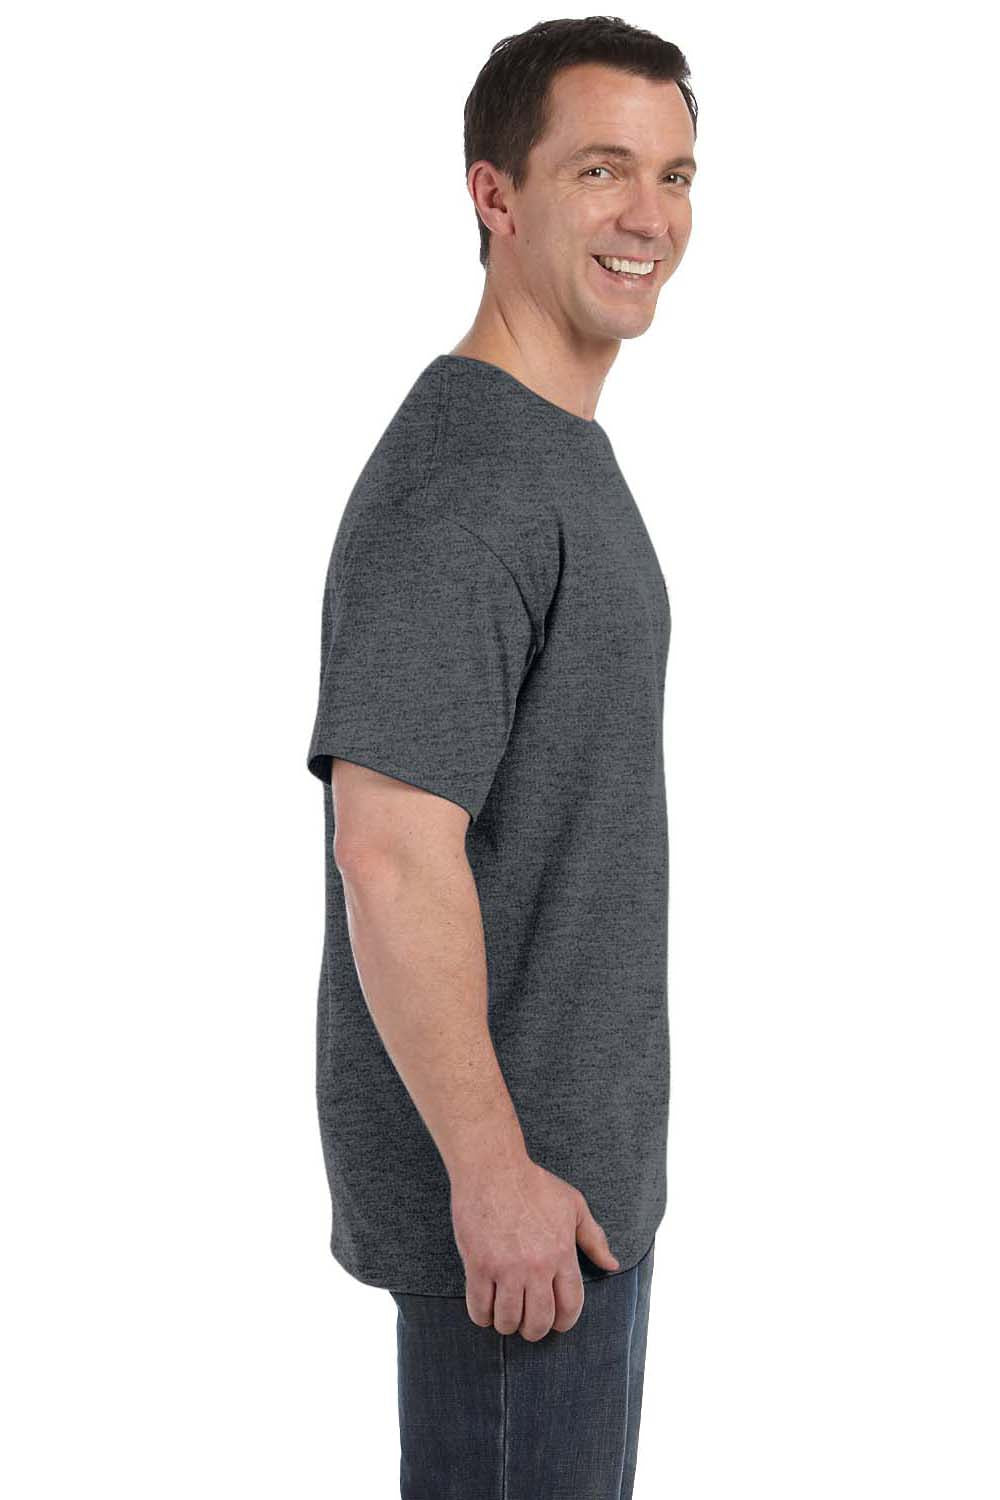 Hanes H5590 Mens ComfortSoft Short Sleeve Crewneck T-Shirt w/ Pocket Heather Charcoal Grey Side